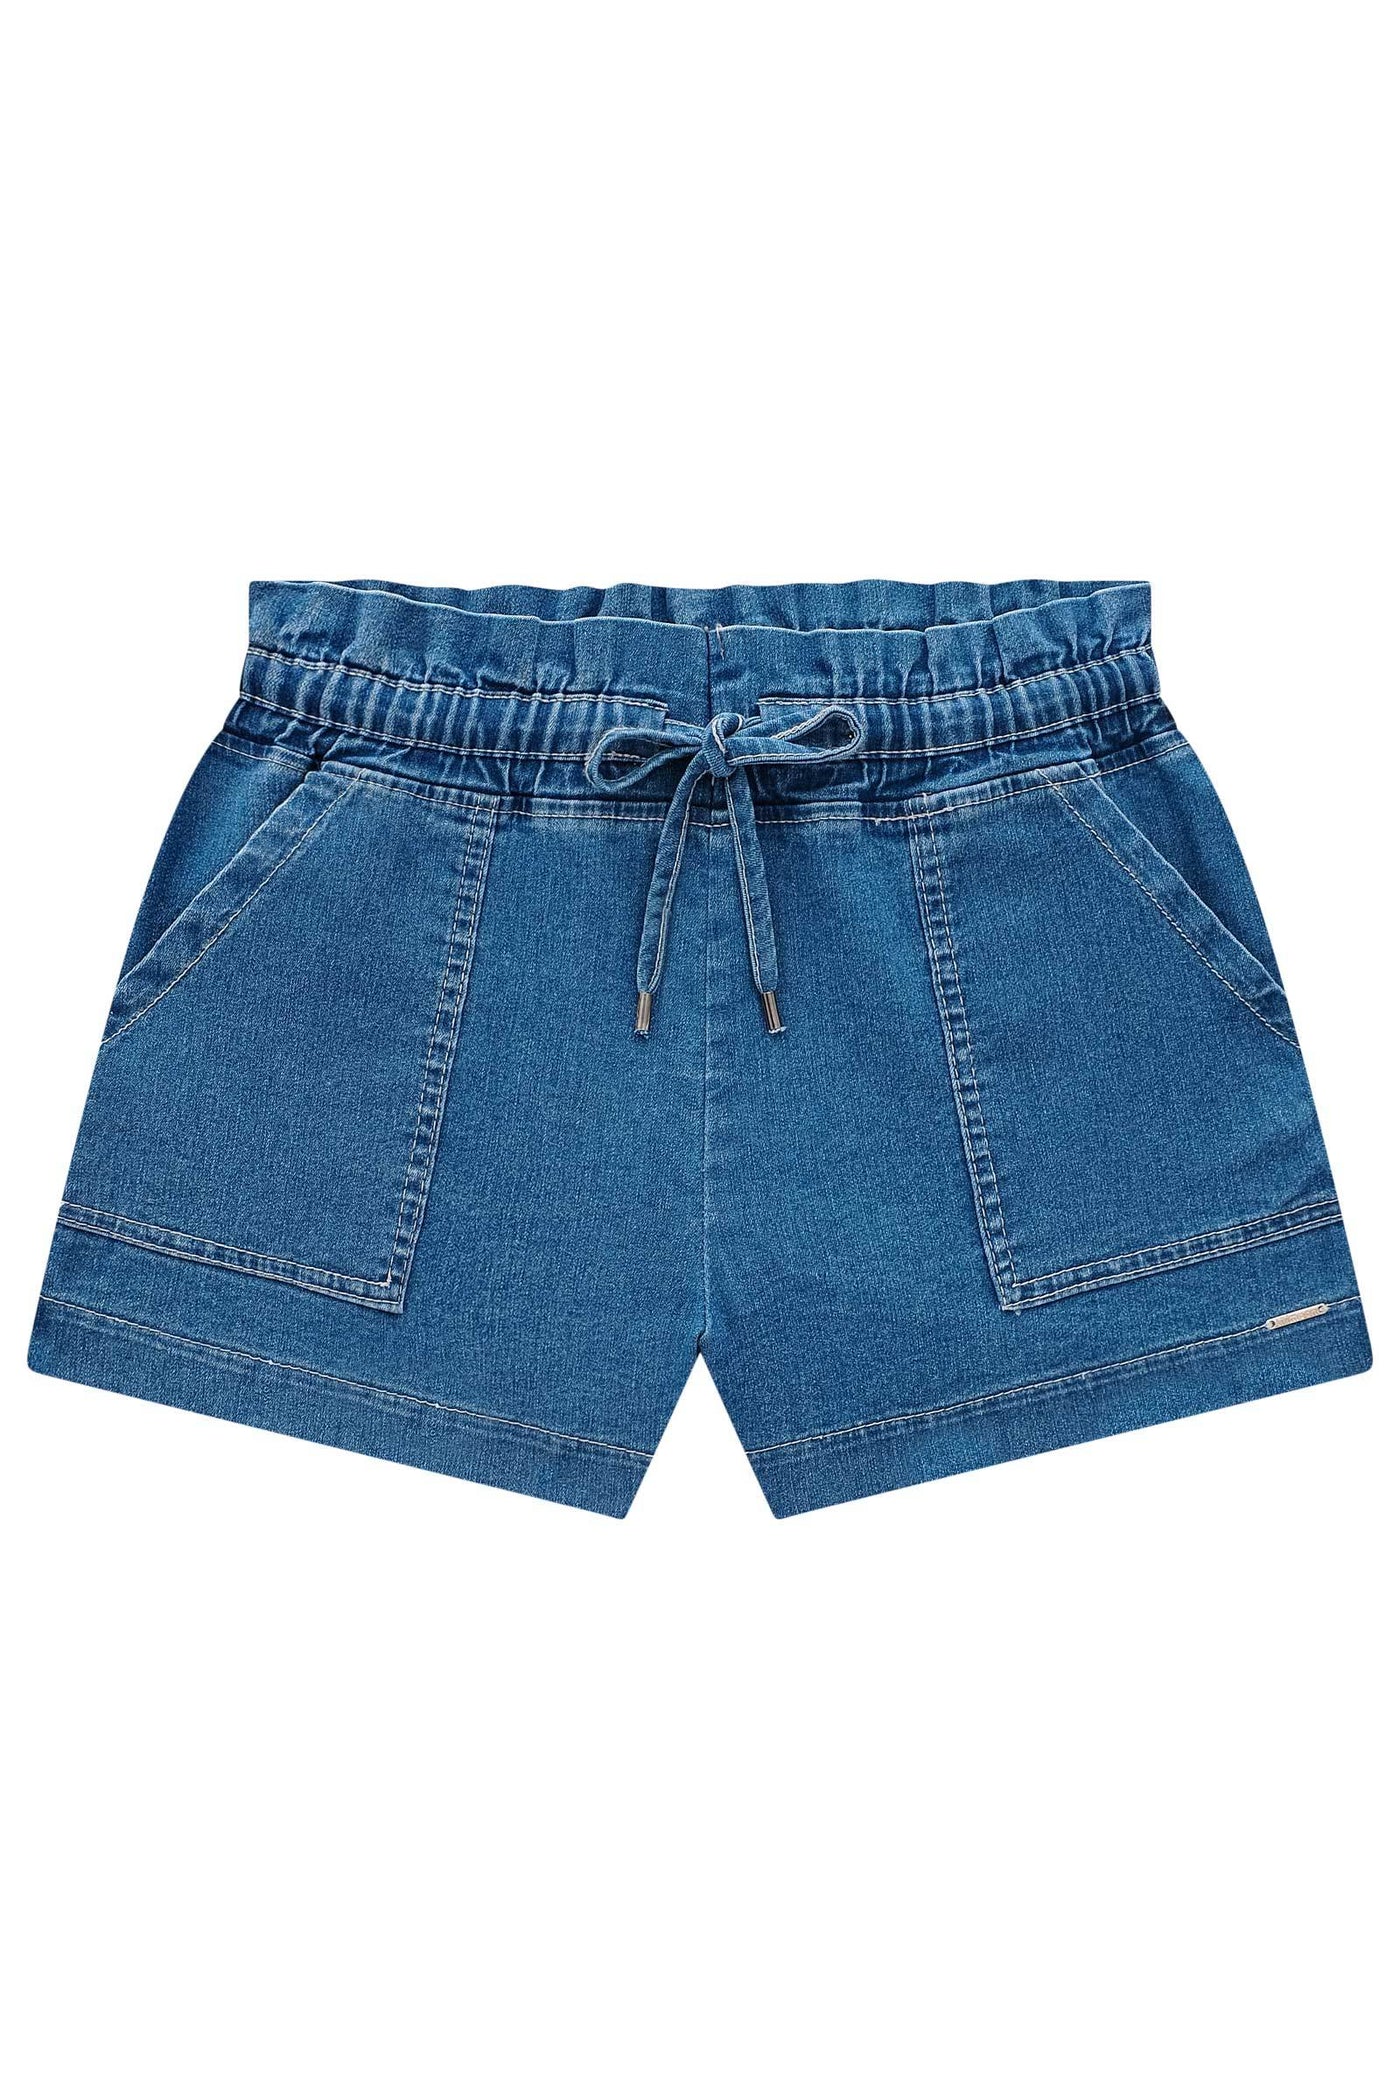 Shorts em Jeans Bellini 75104 Lilimoon